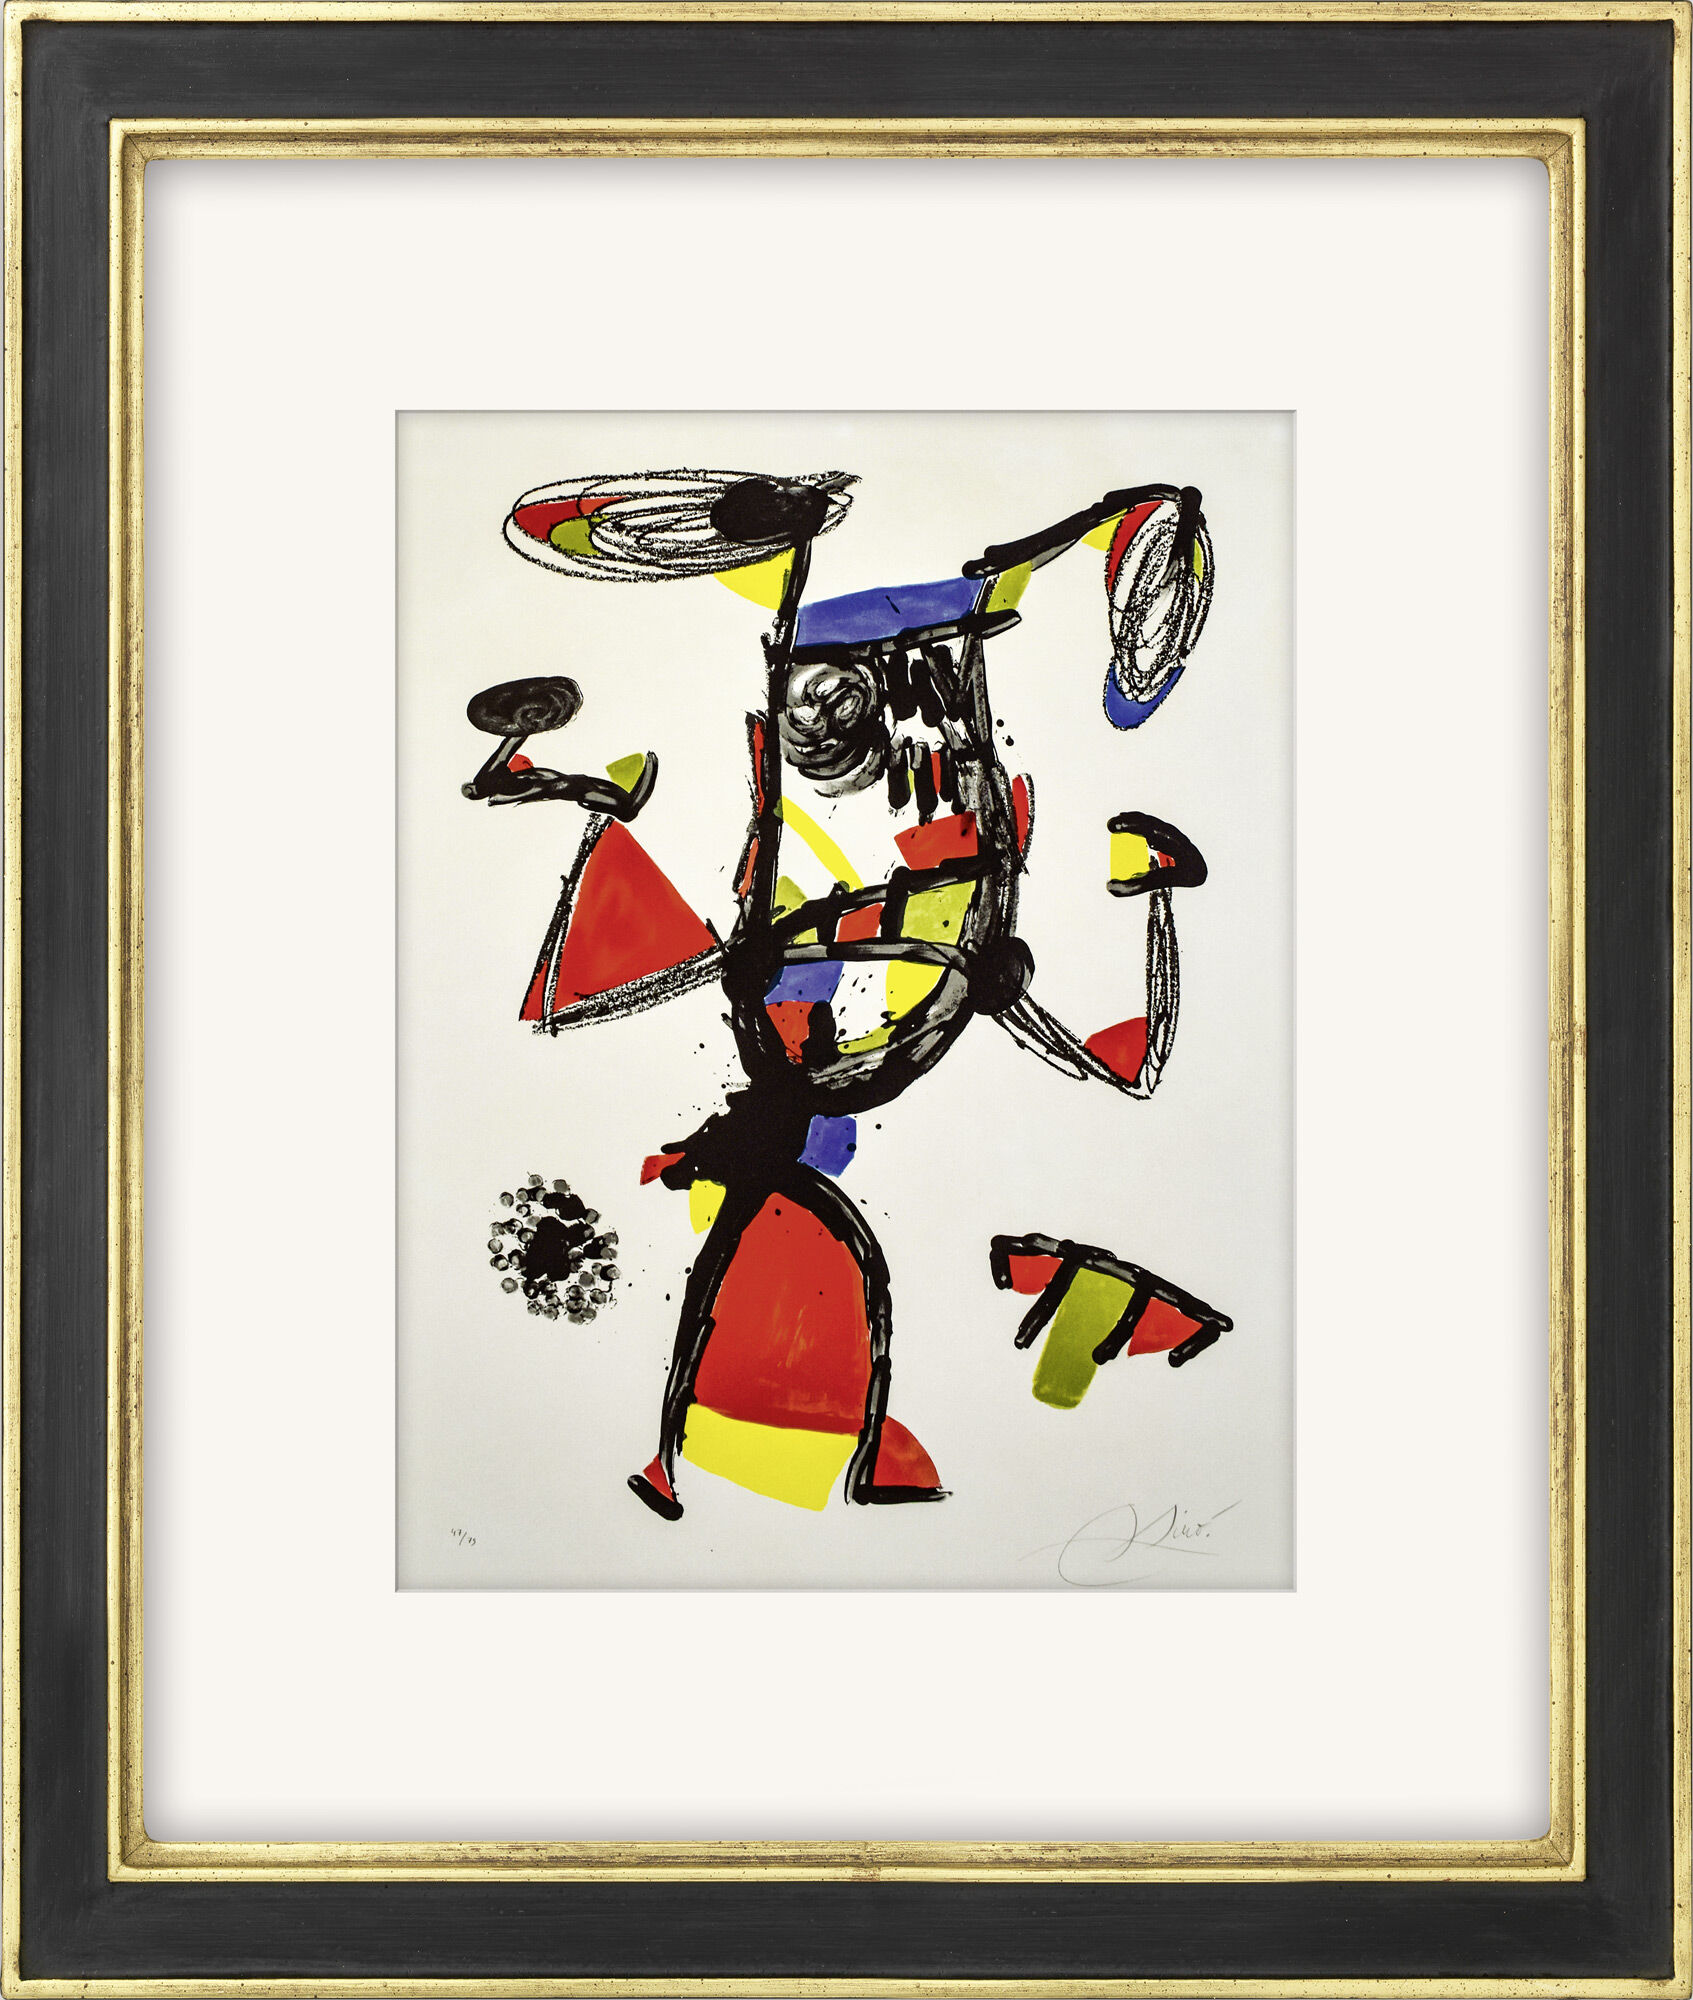 Beeld "Majorette (Cheerleader)" (1978) von Joan Miró